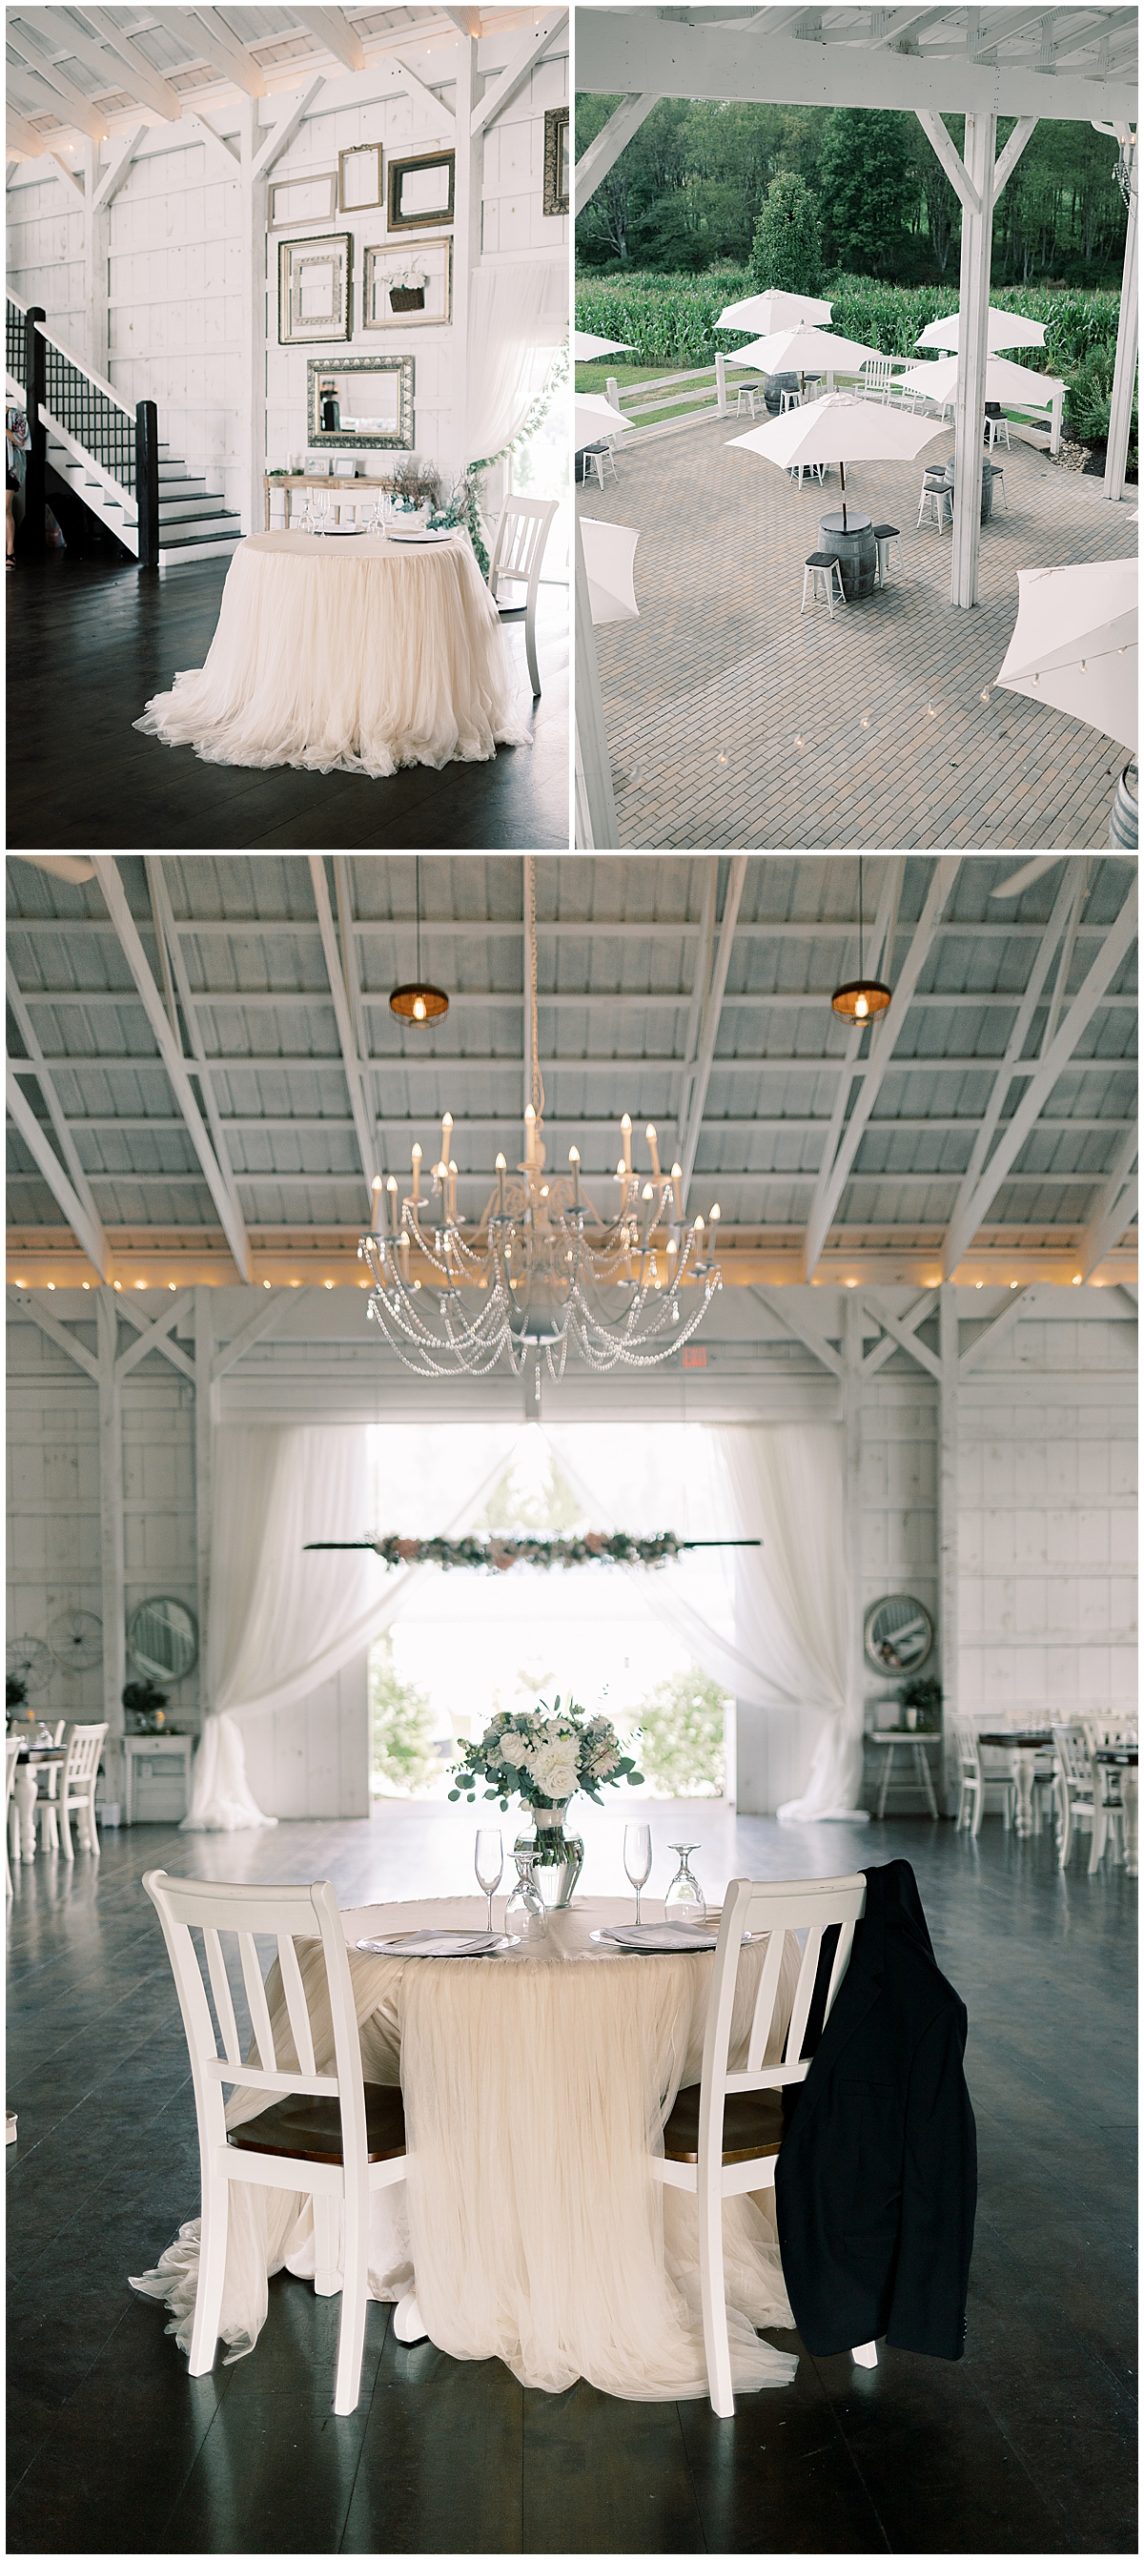 wedding venue details of head table inside barn by Maryland wedding photographer 